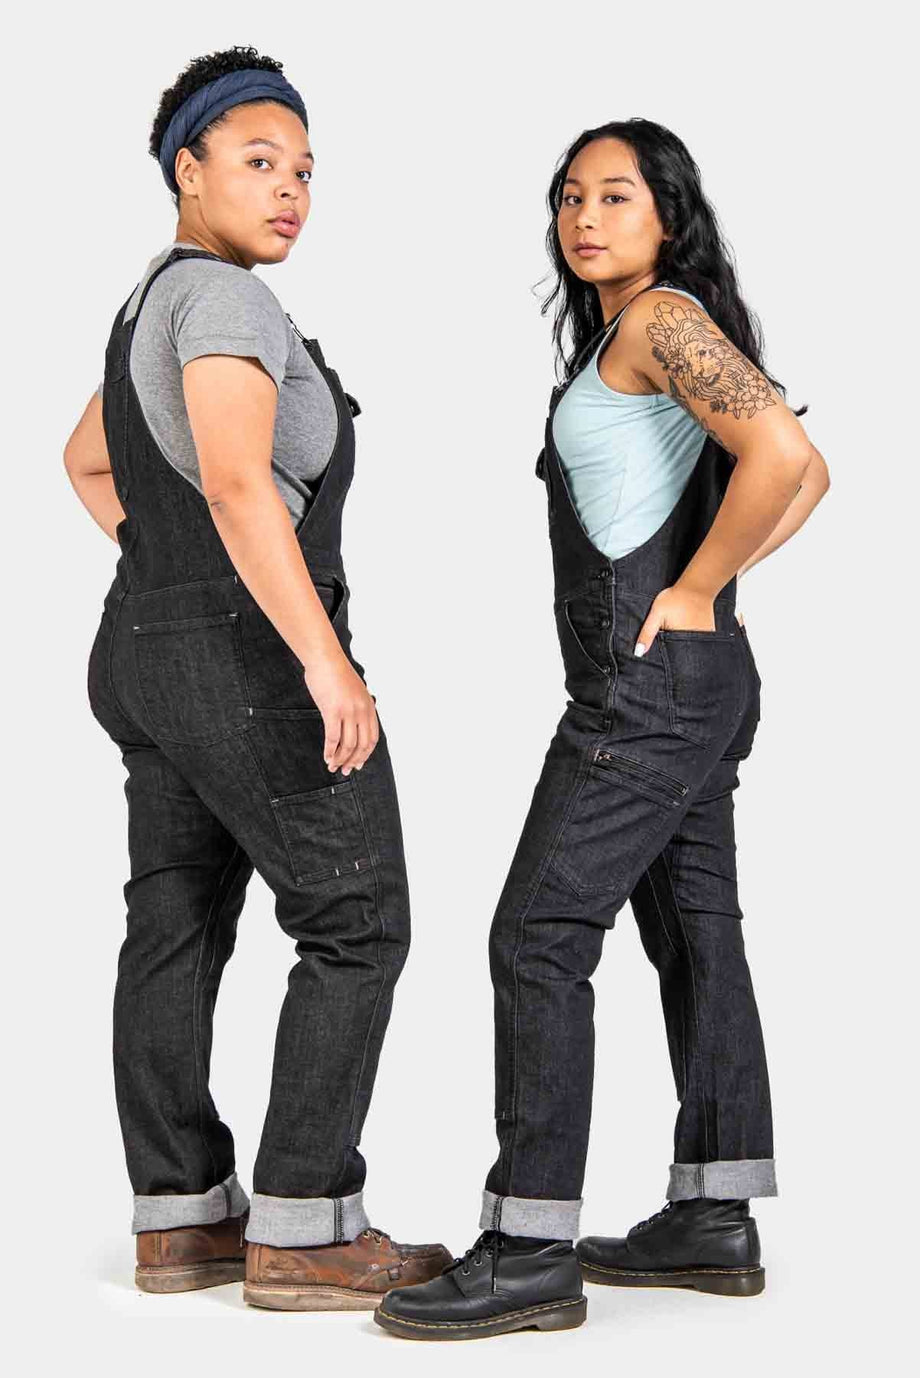 Freshley Overalls For Women Heathered Black Denim | Dovetail Workwear